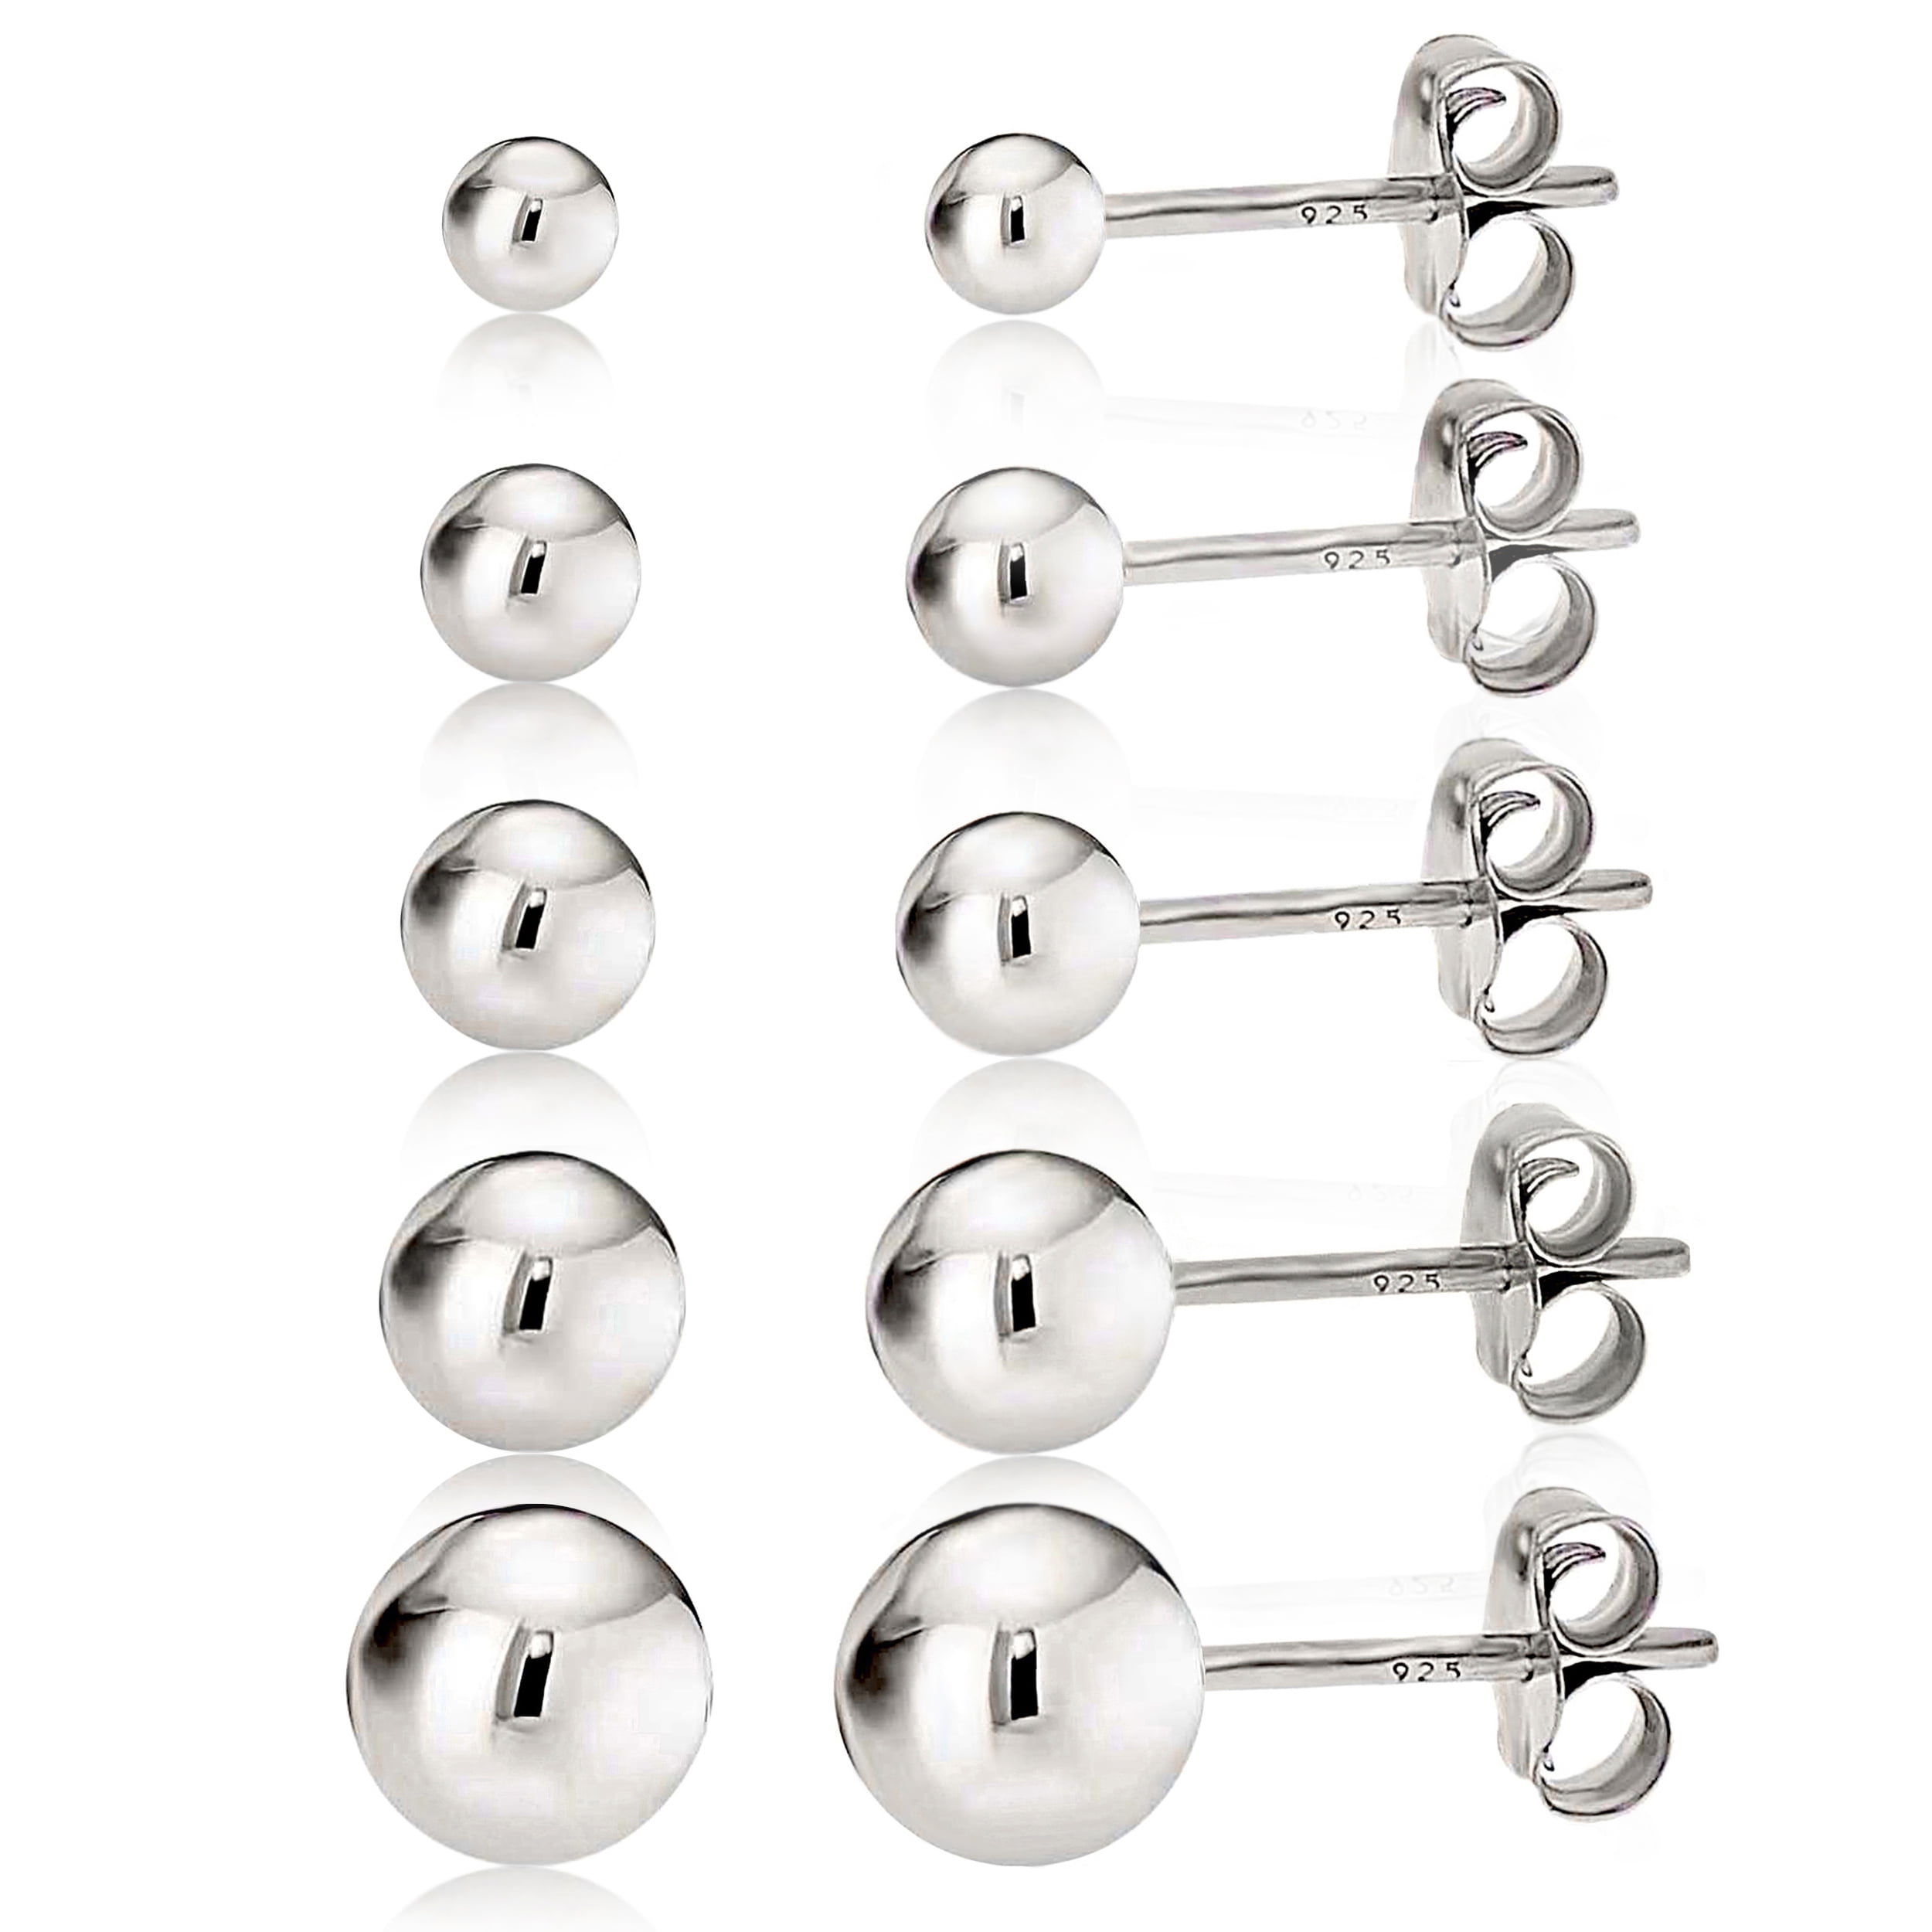 Medium Earring Backs (4.7x5.5mm) Sterling Silver - 10 pcs.-2